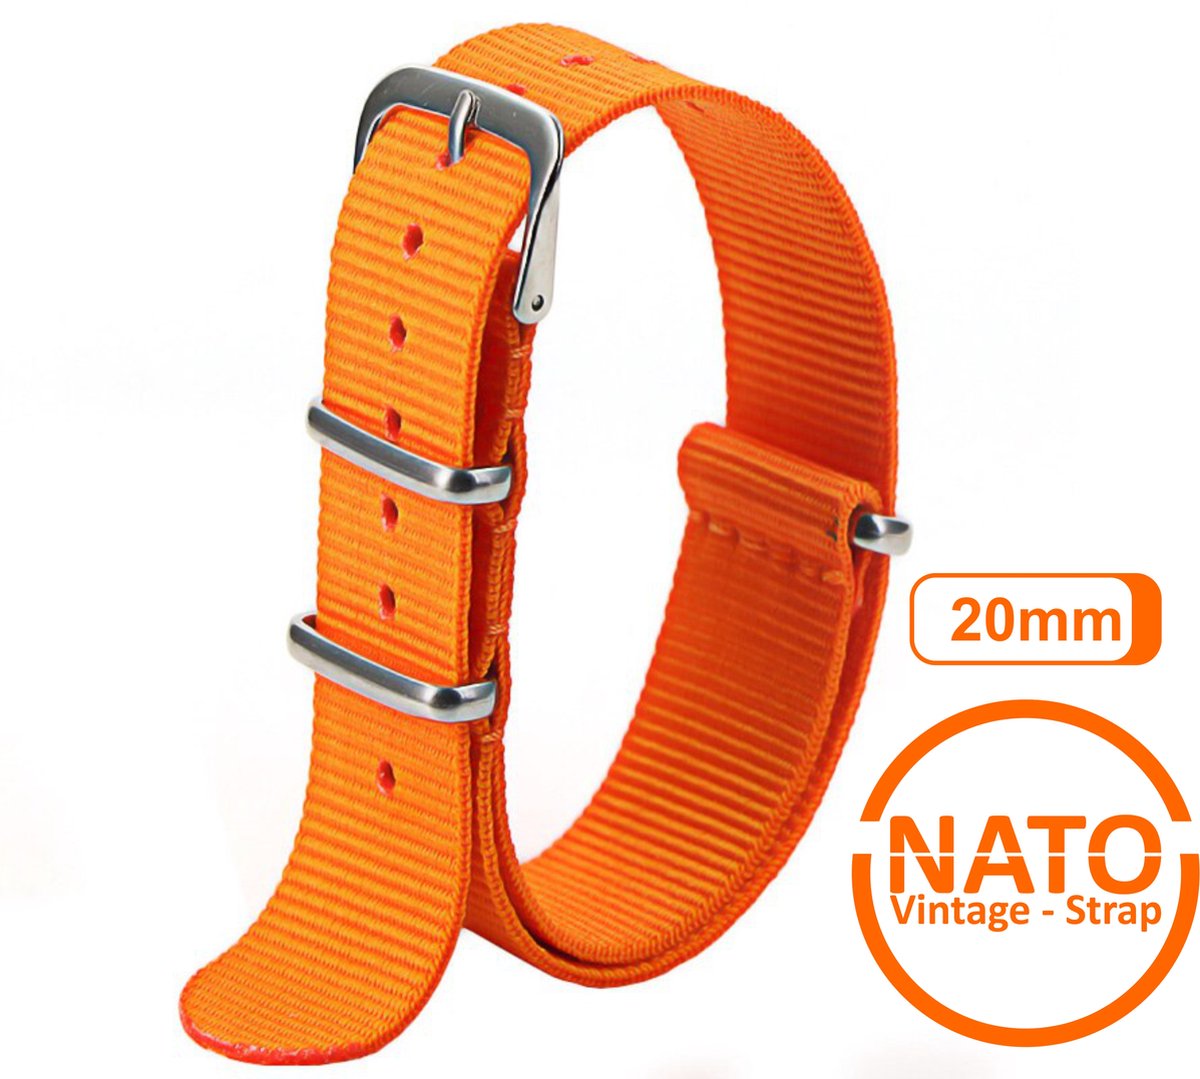 20mm Nato Strap Oranje - Vintage James Bond - Nato Strap collectie - Mannen - Horlogebanden - 20 mm bandbreedte voor oa. Seiko Rolex Omega Casio en Citizen